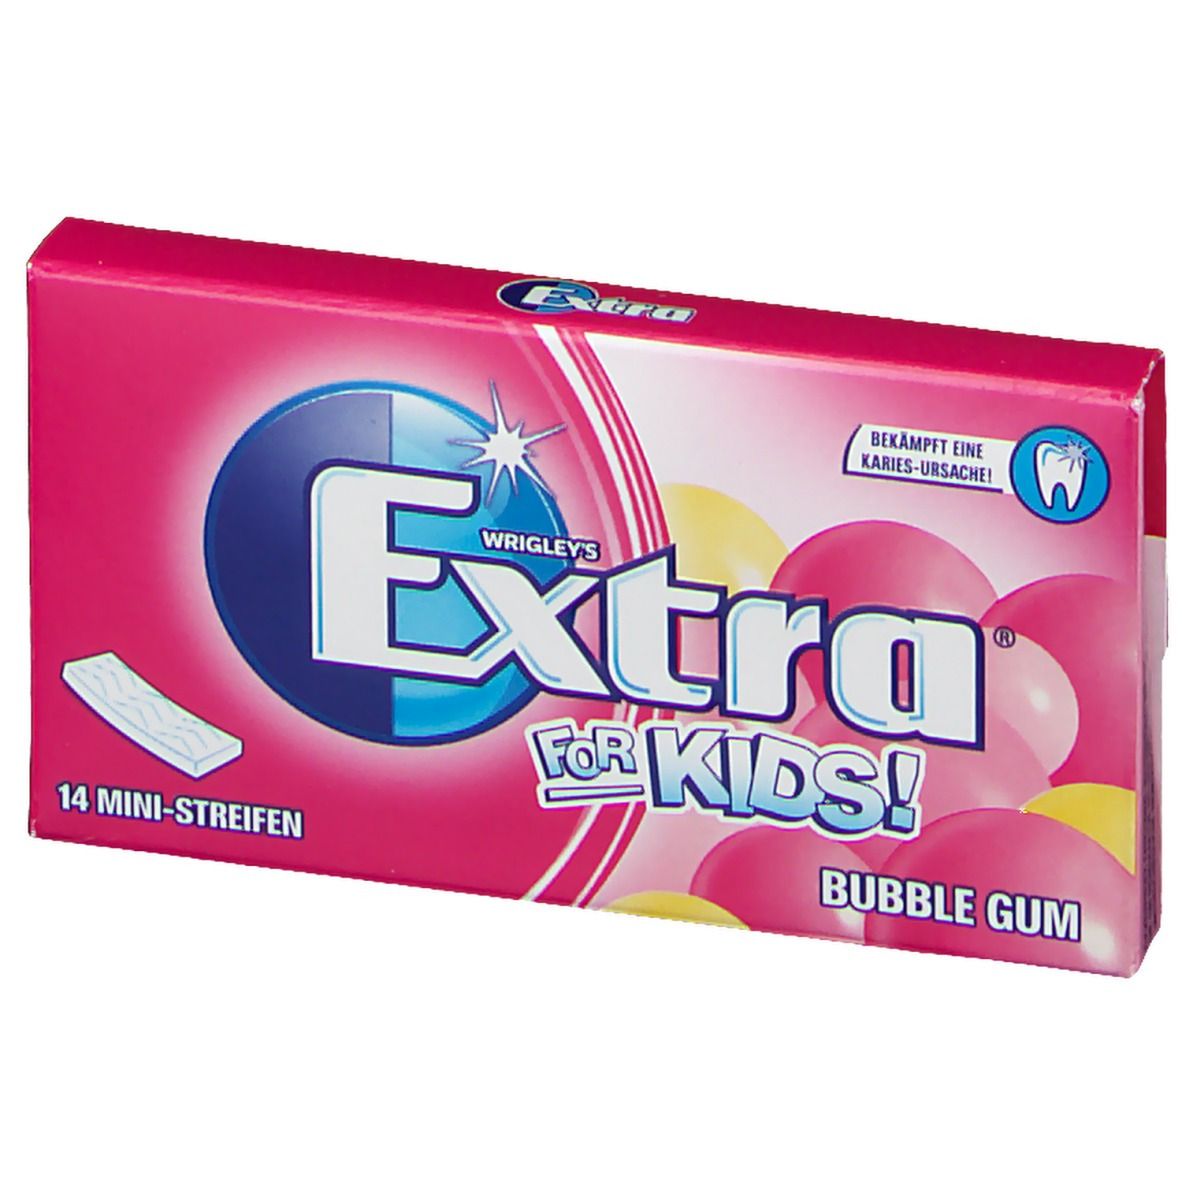 WRIGLEYS Extra for Kids Bubble Gum